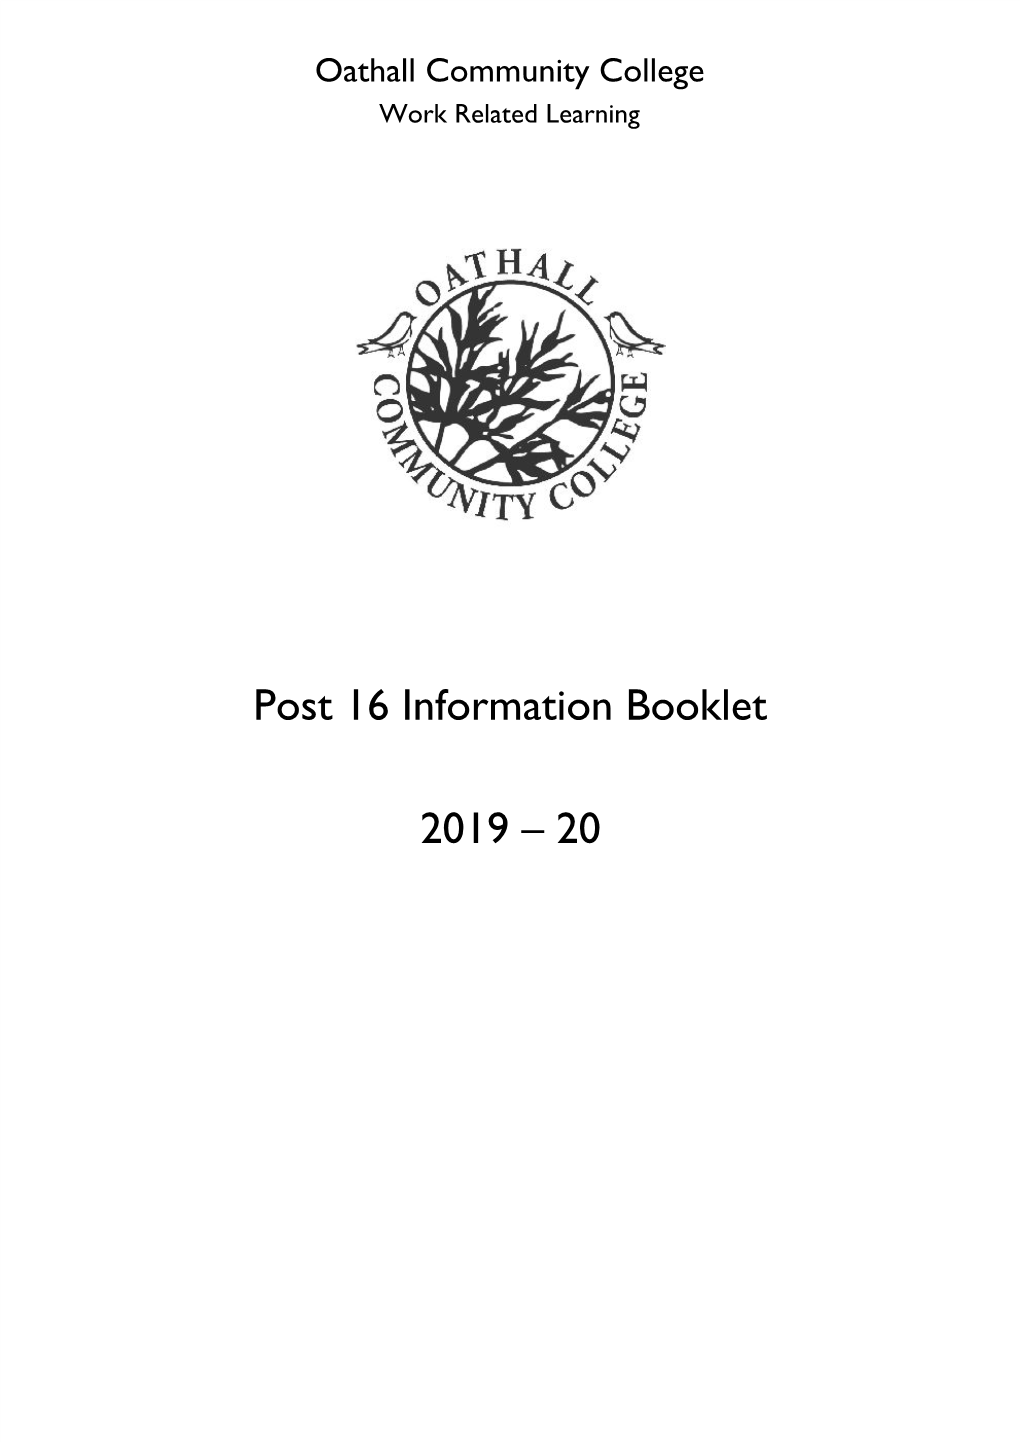 Post 16 Information Booklet 2019